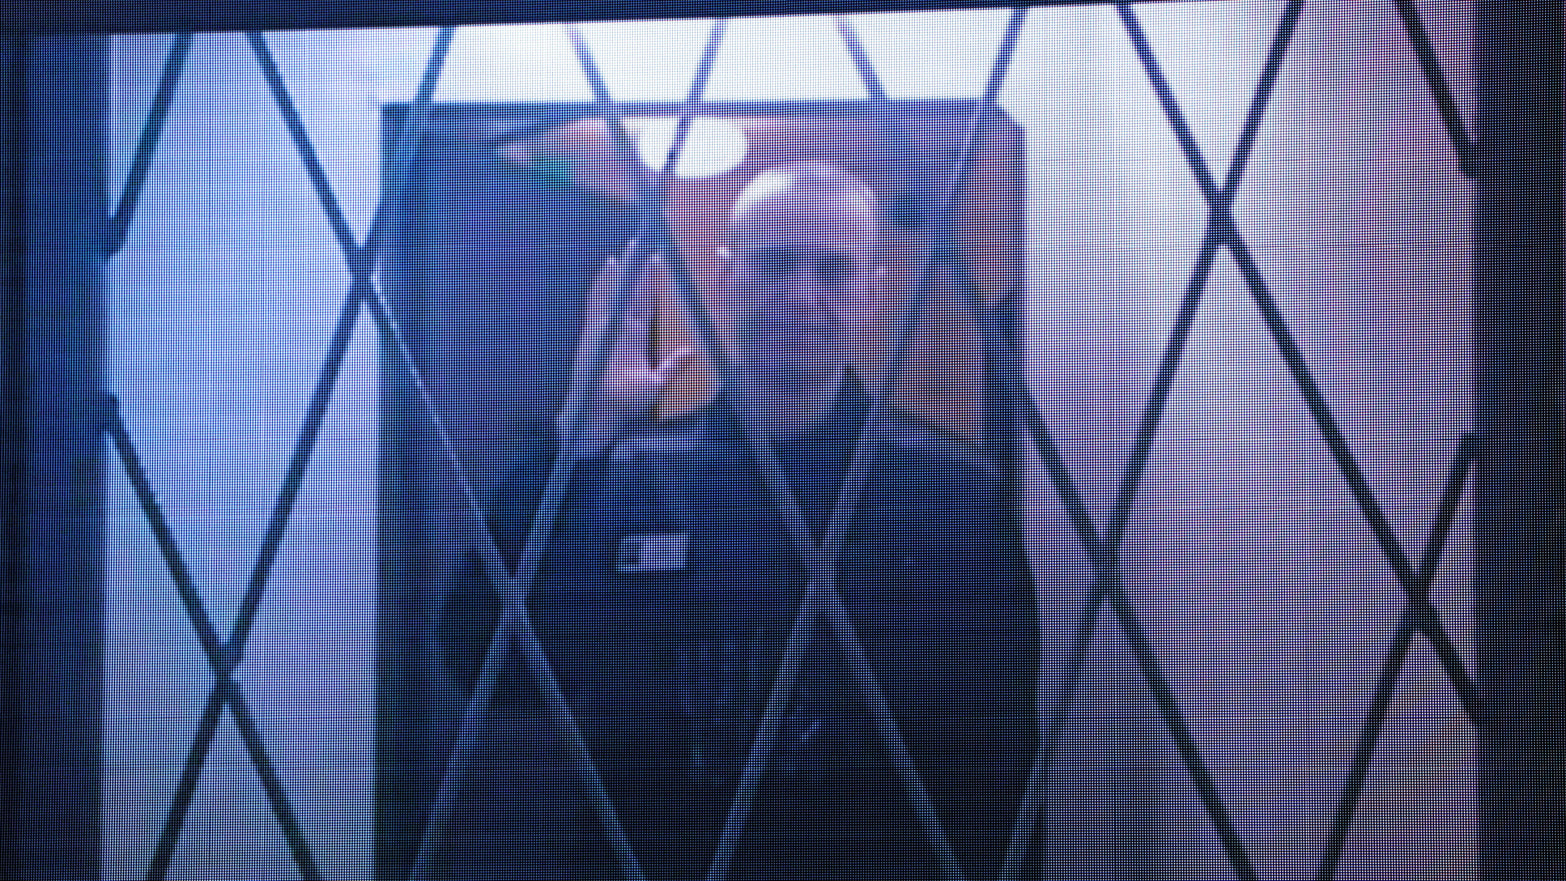 Alexei Navalny behind bars.